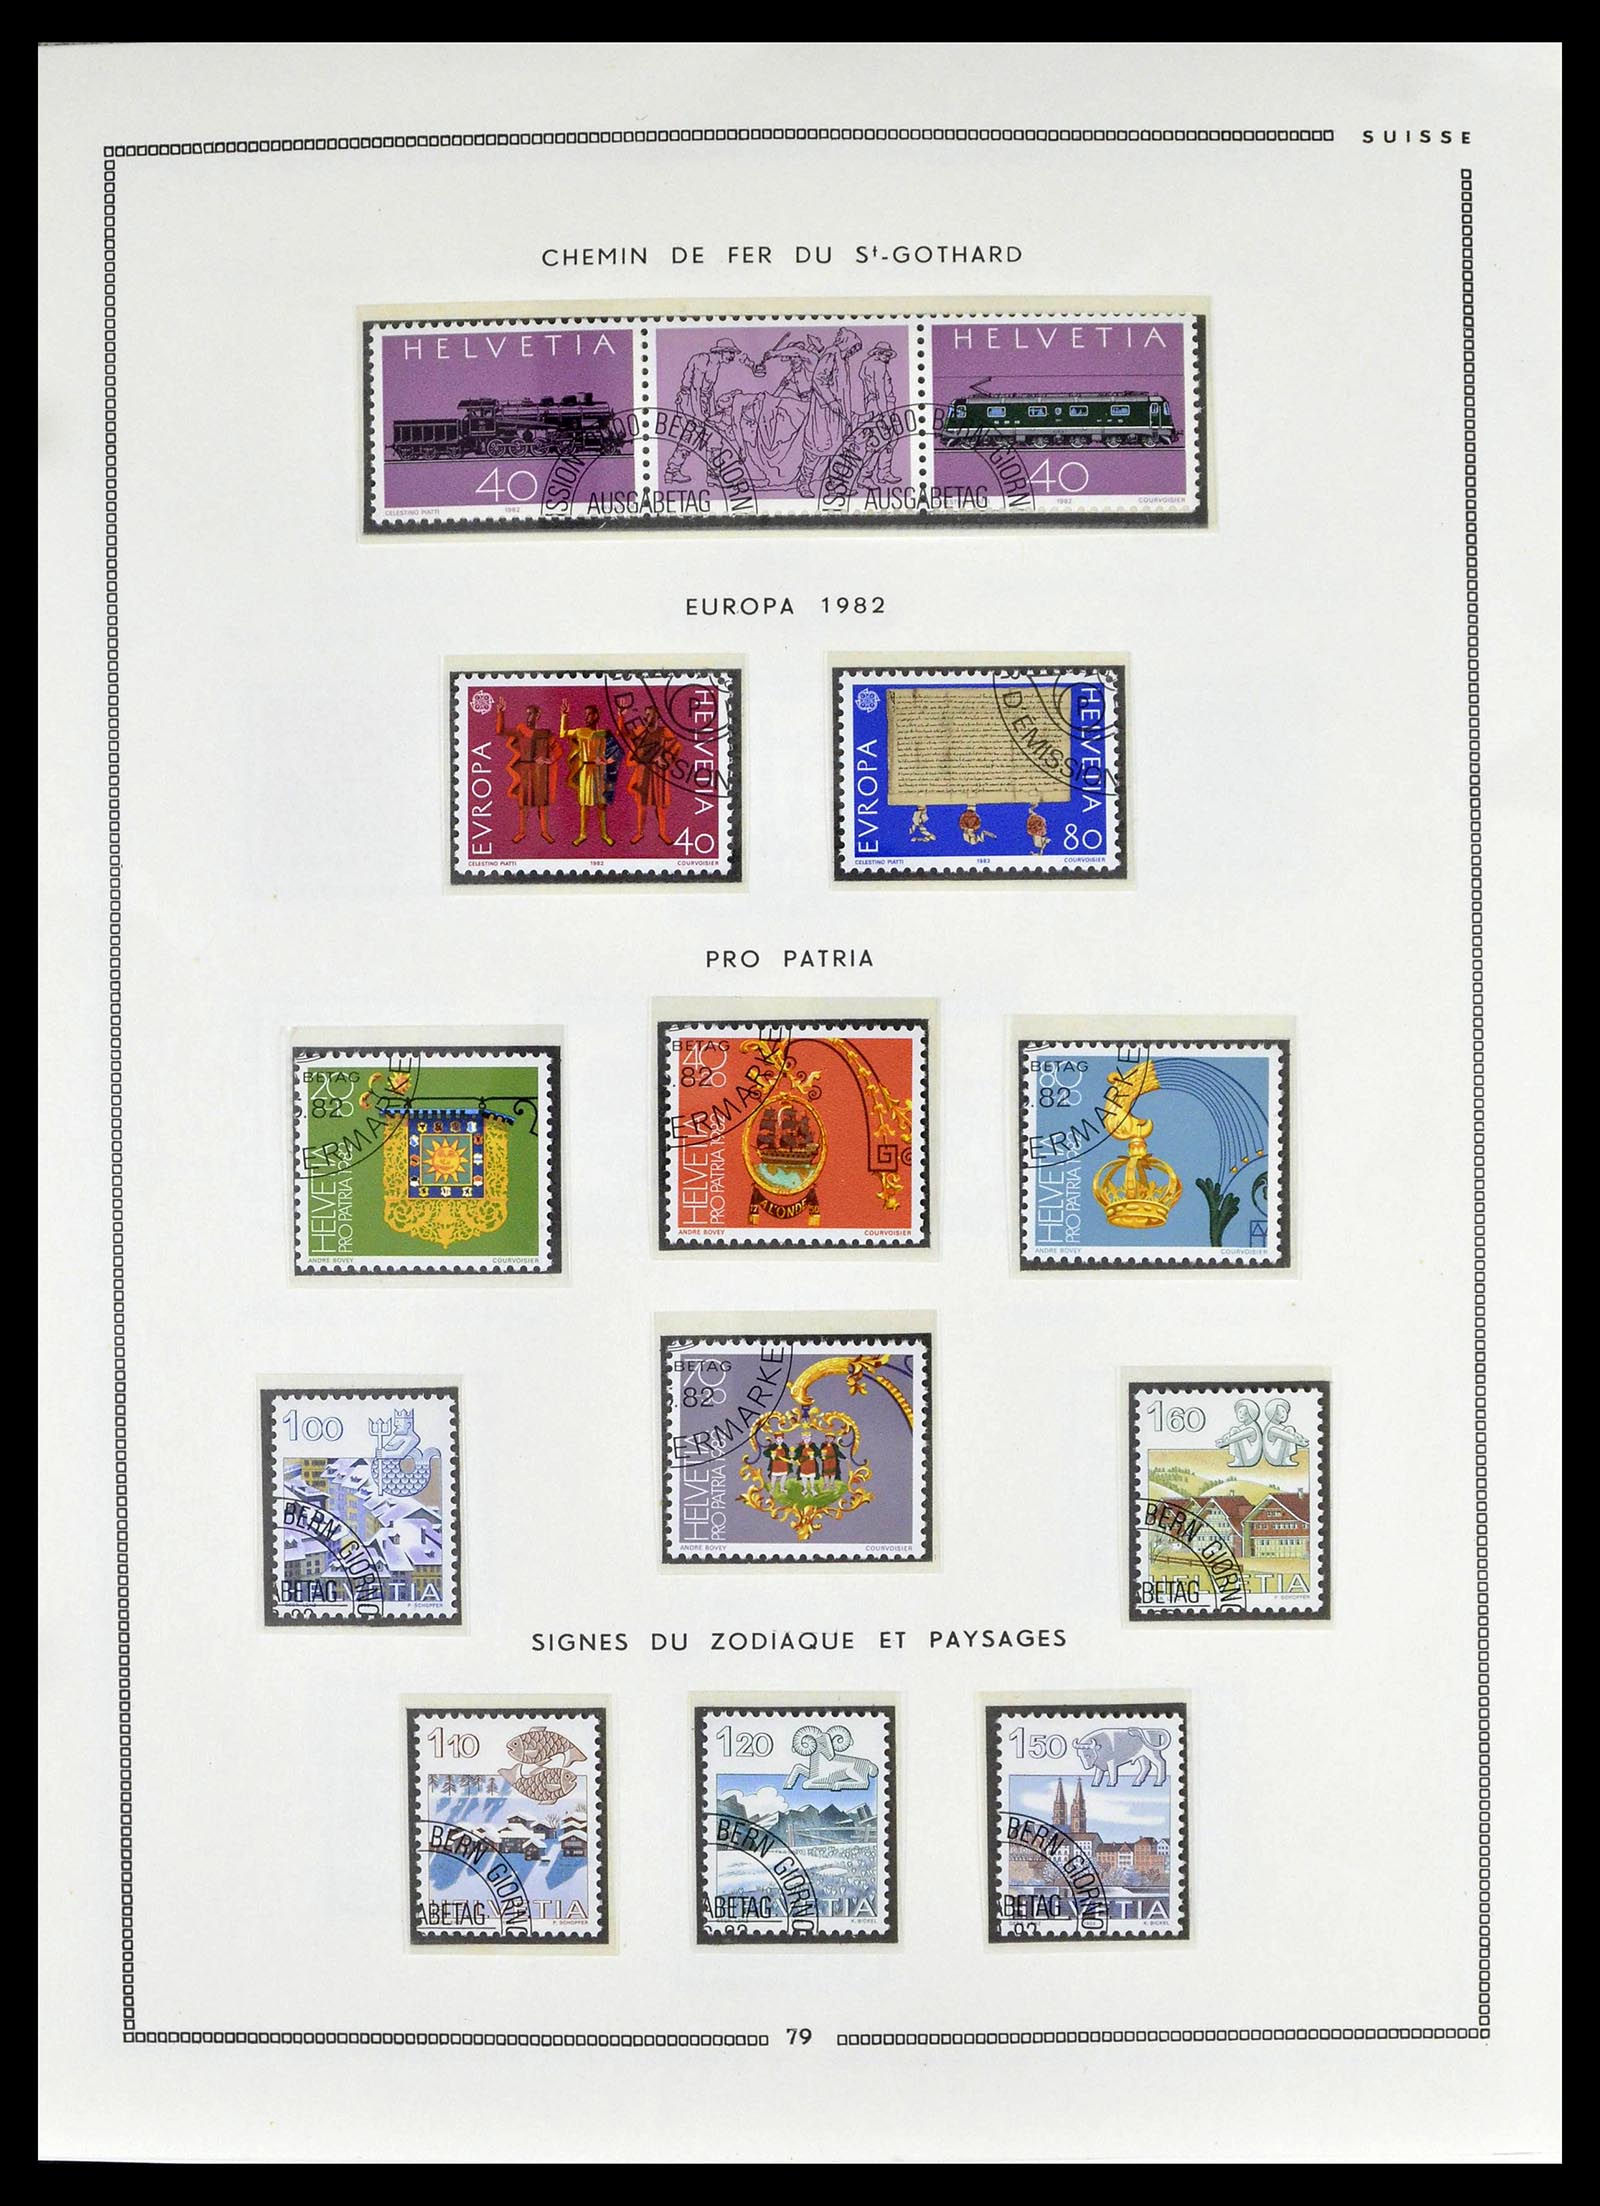 39094 0077 - Stamp collection 39094 Switzerland 1850-2005.